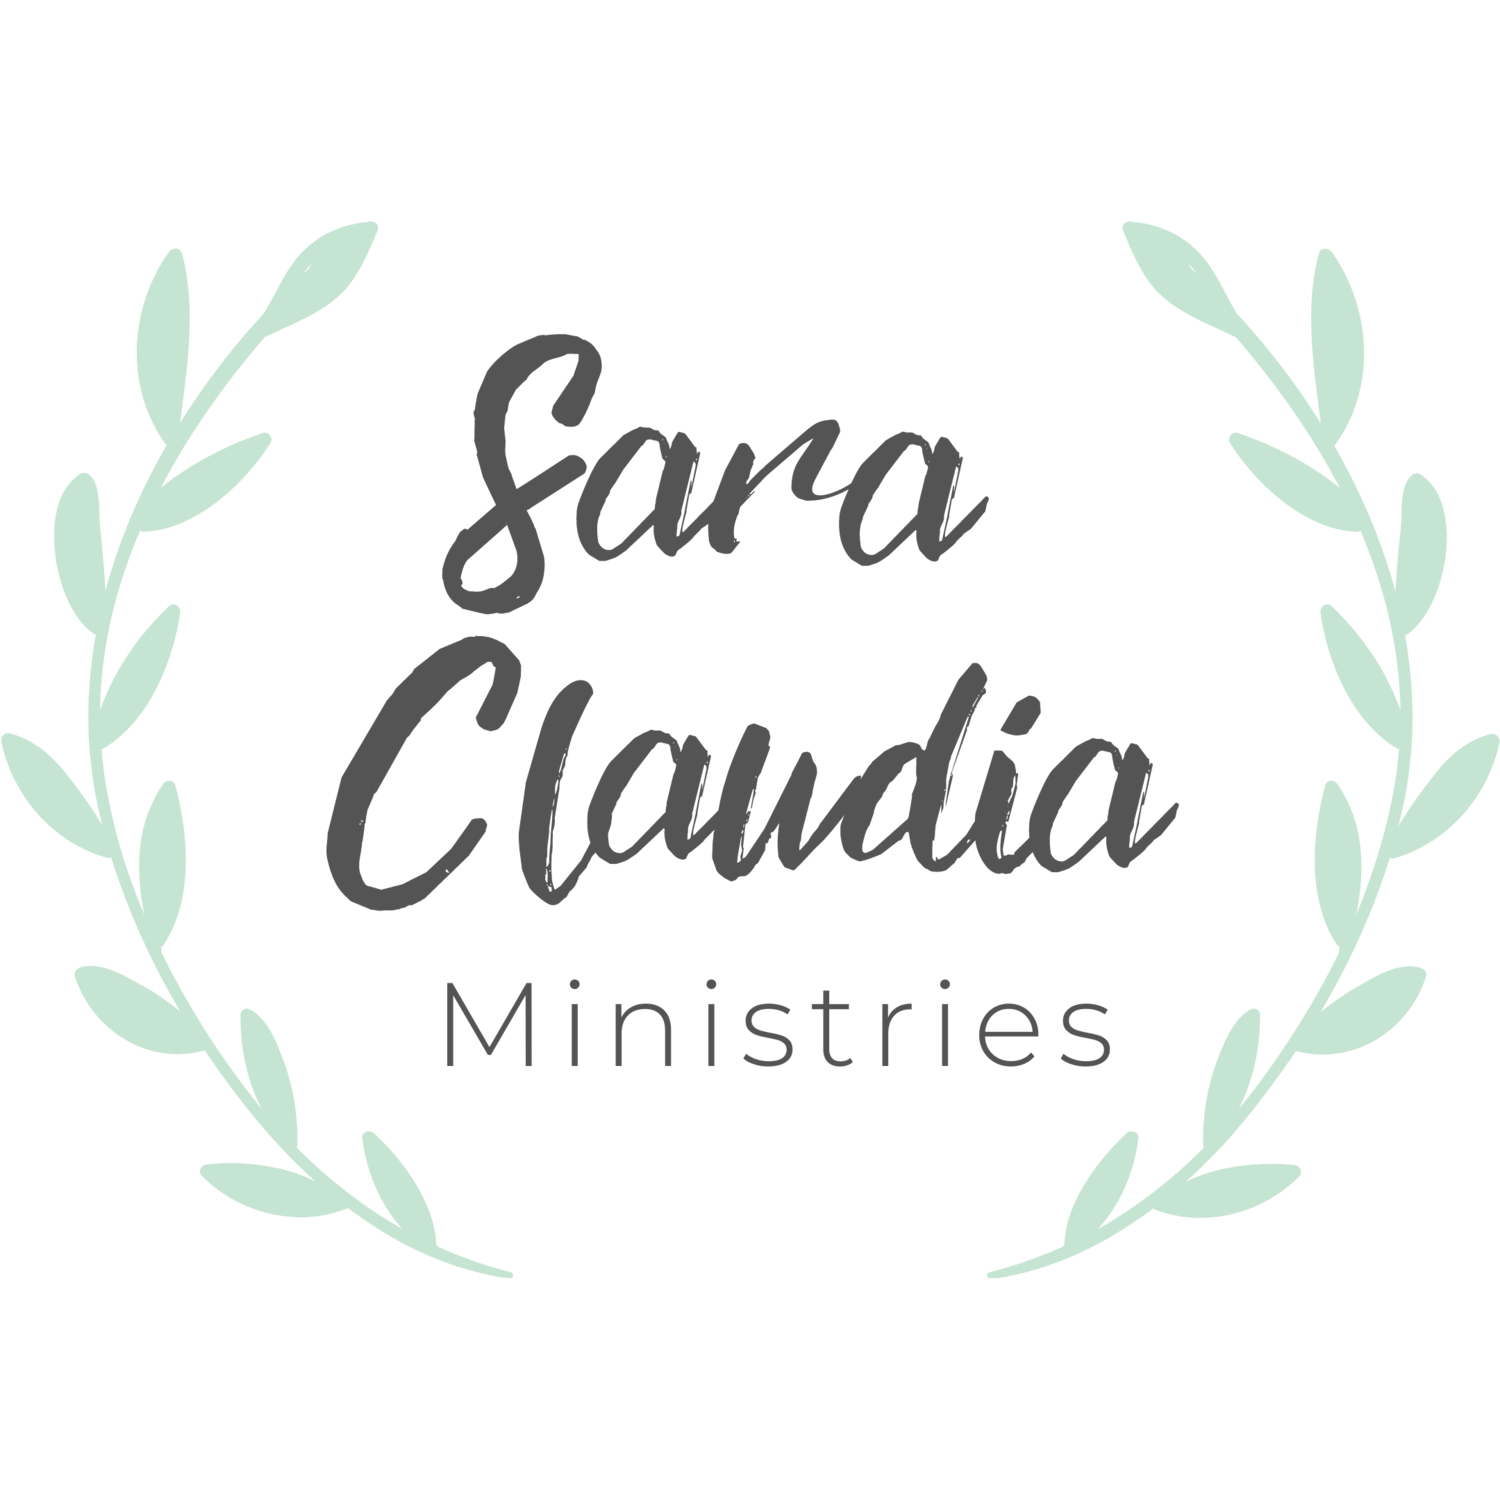 Sara Claudia Ministries